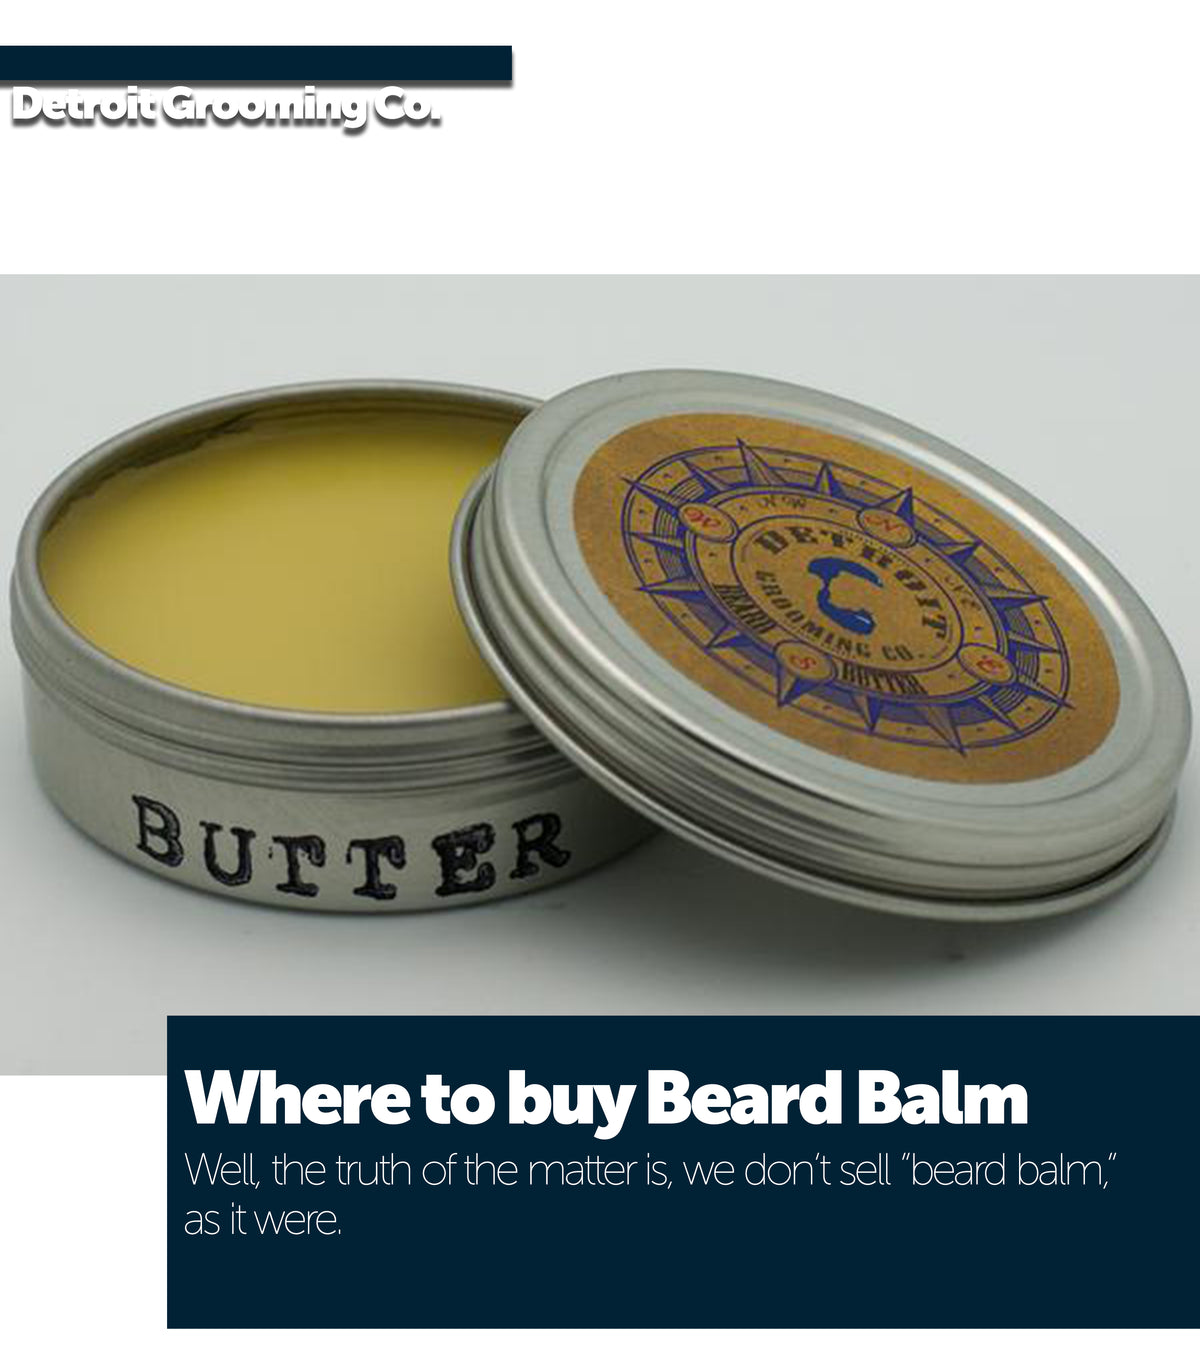 Where to buy beard balm